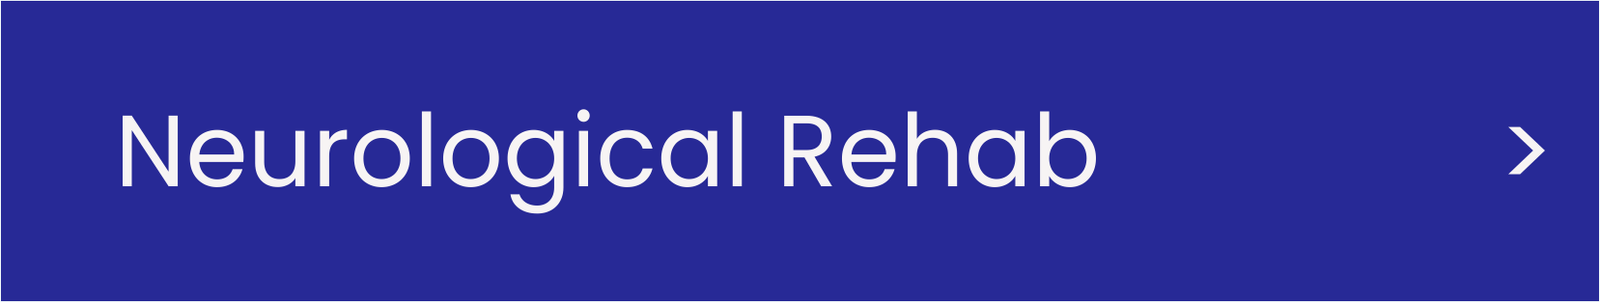 Neurological Rehab Neurological 1